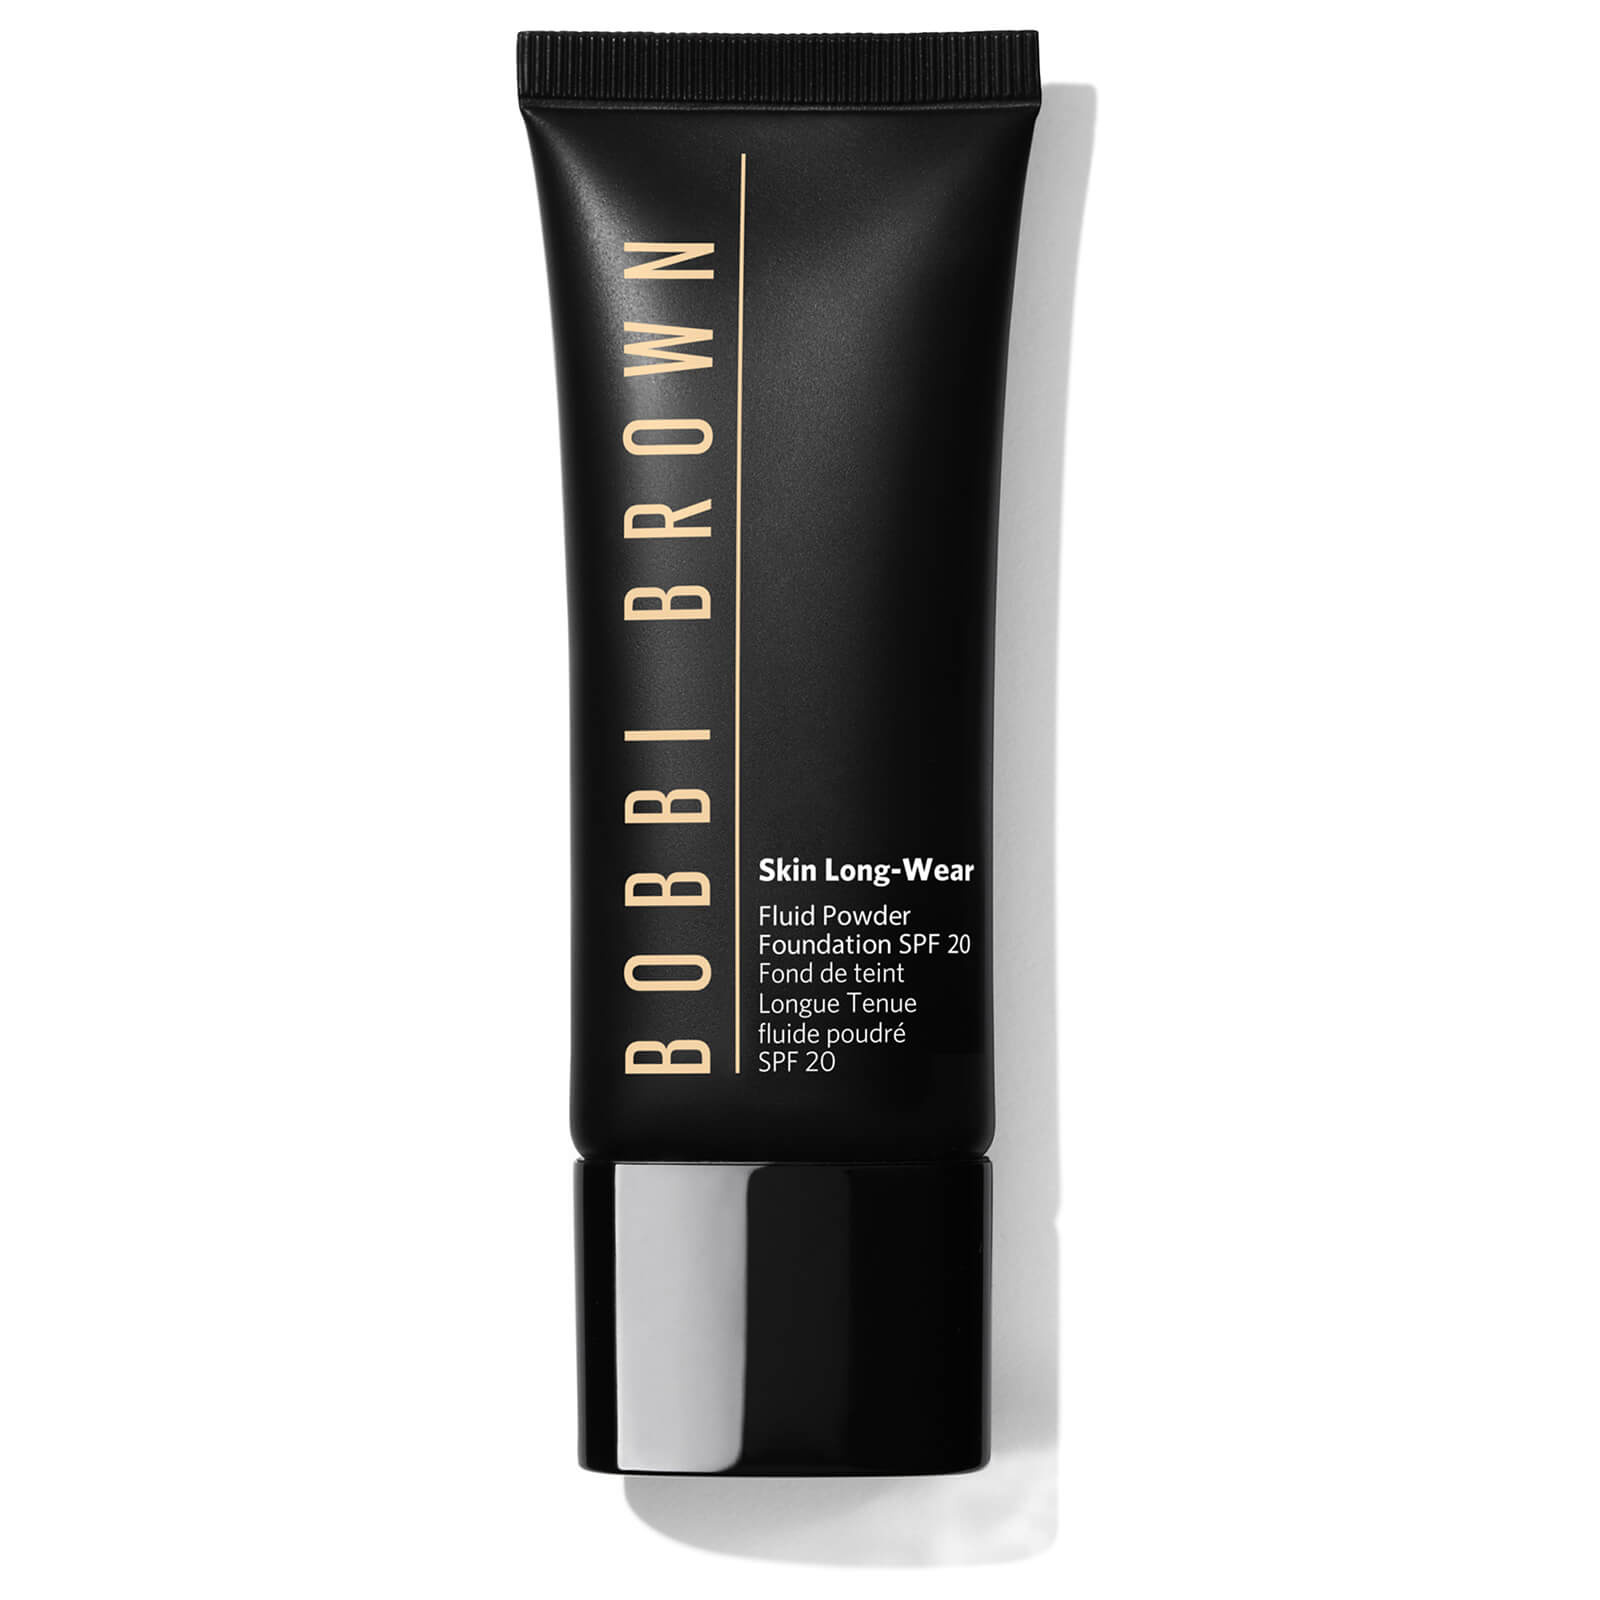 Bobbi Brown Skin Long-Wear Fluid Powder Foundation 40ml (Various Shades) - Warm Sand